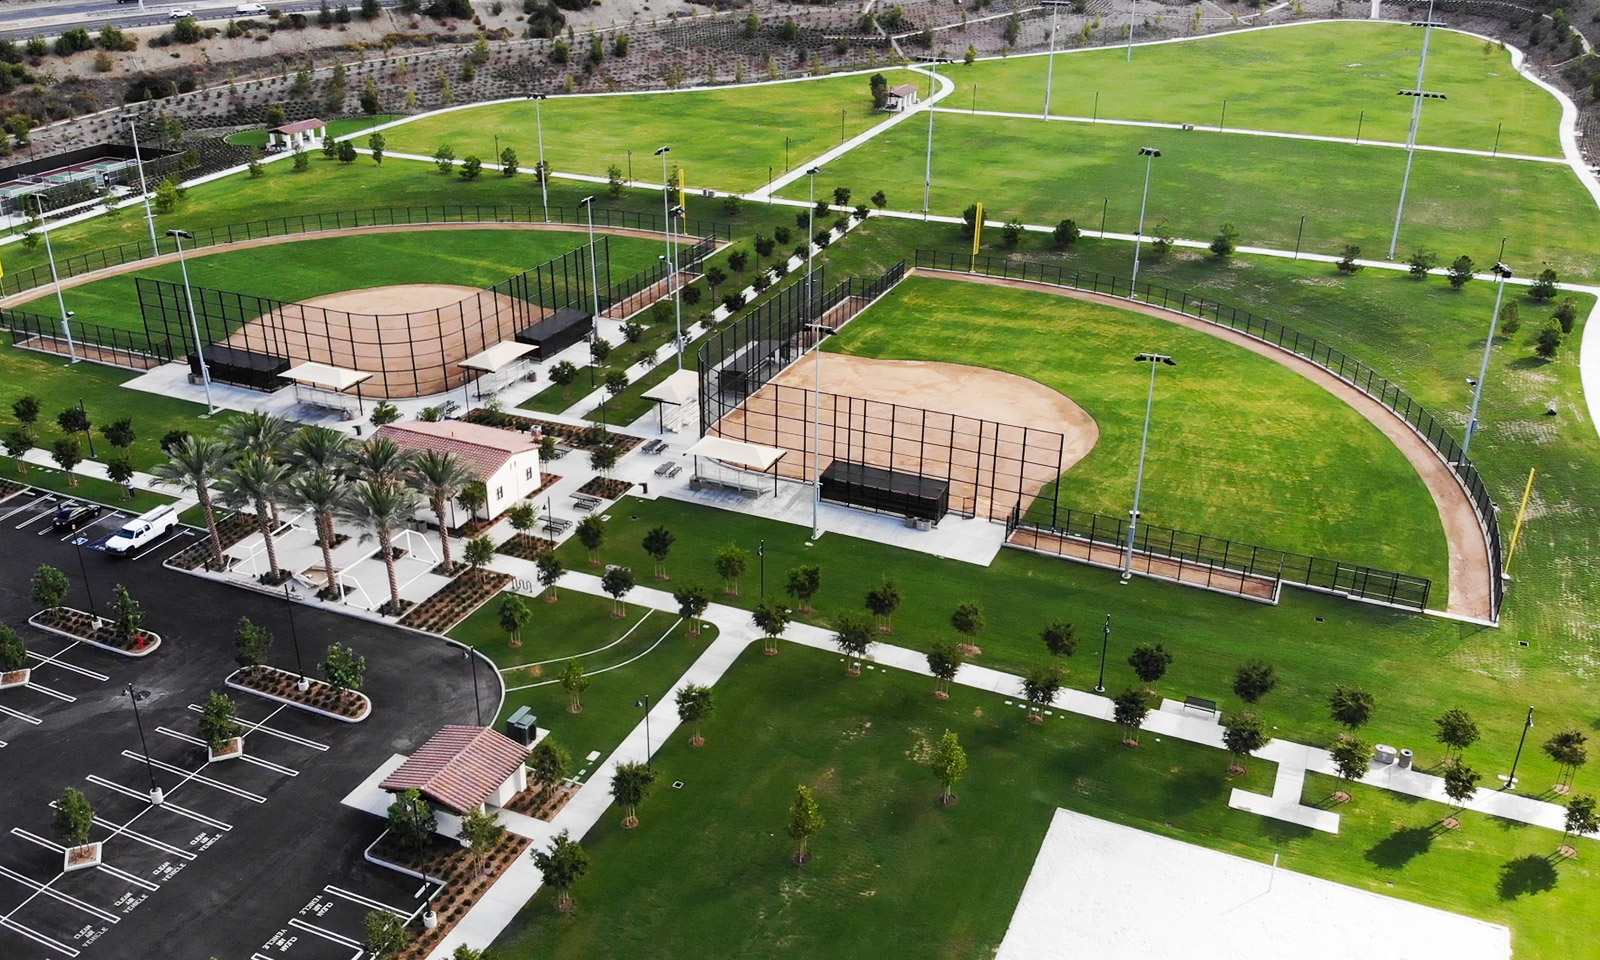 26-acre Portola Springs Park opening soon